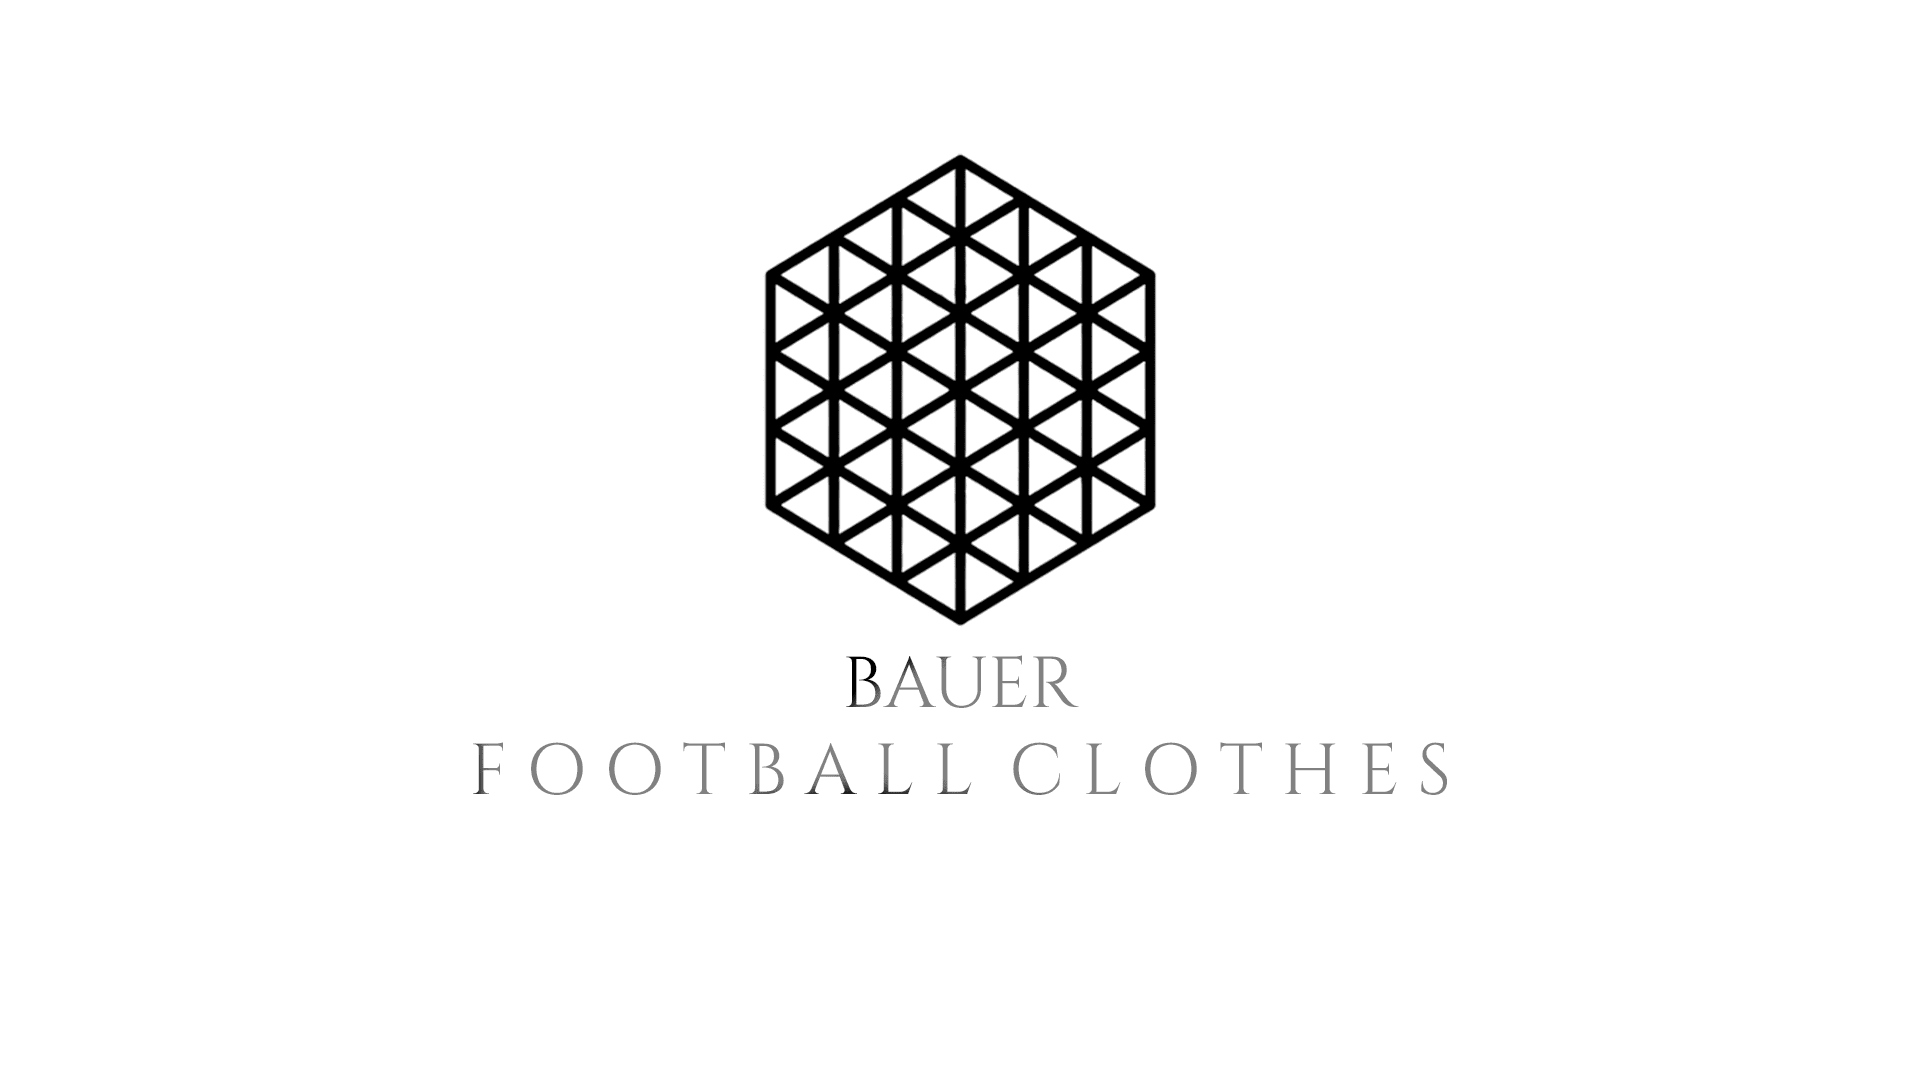 Bauer Football Clothes